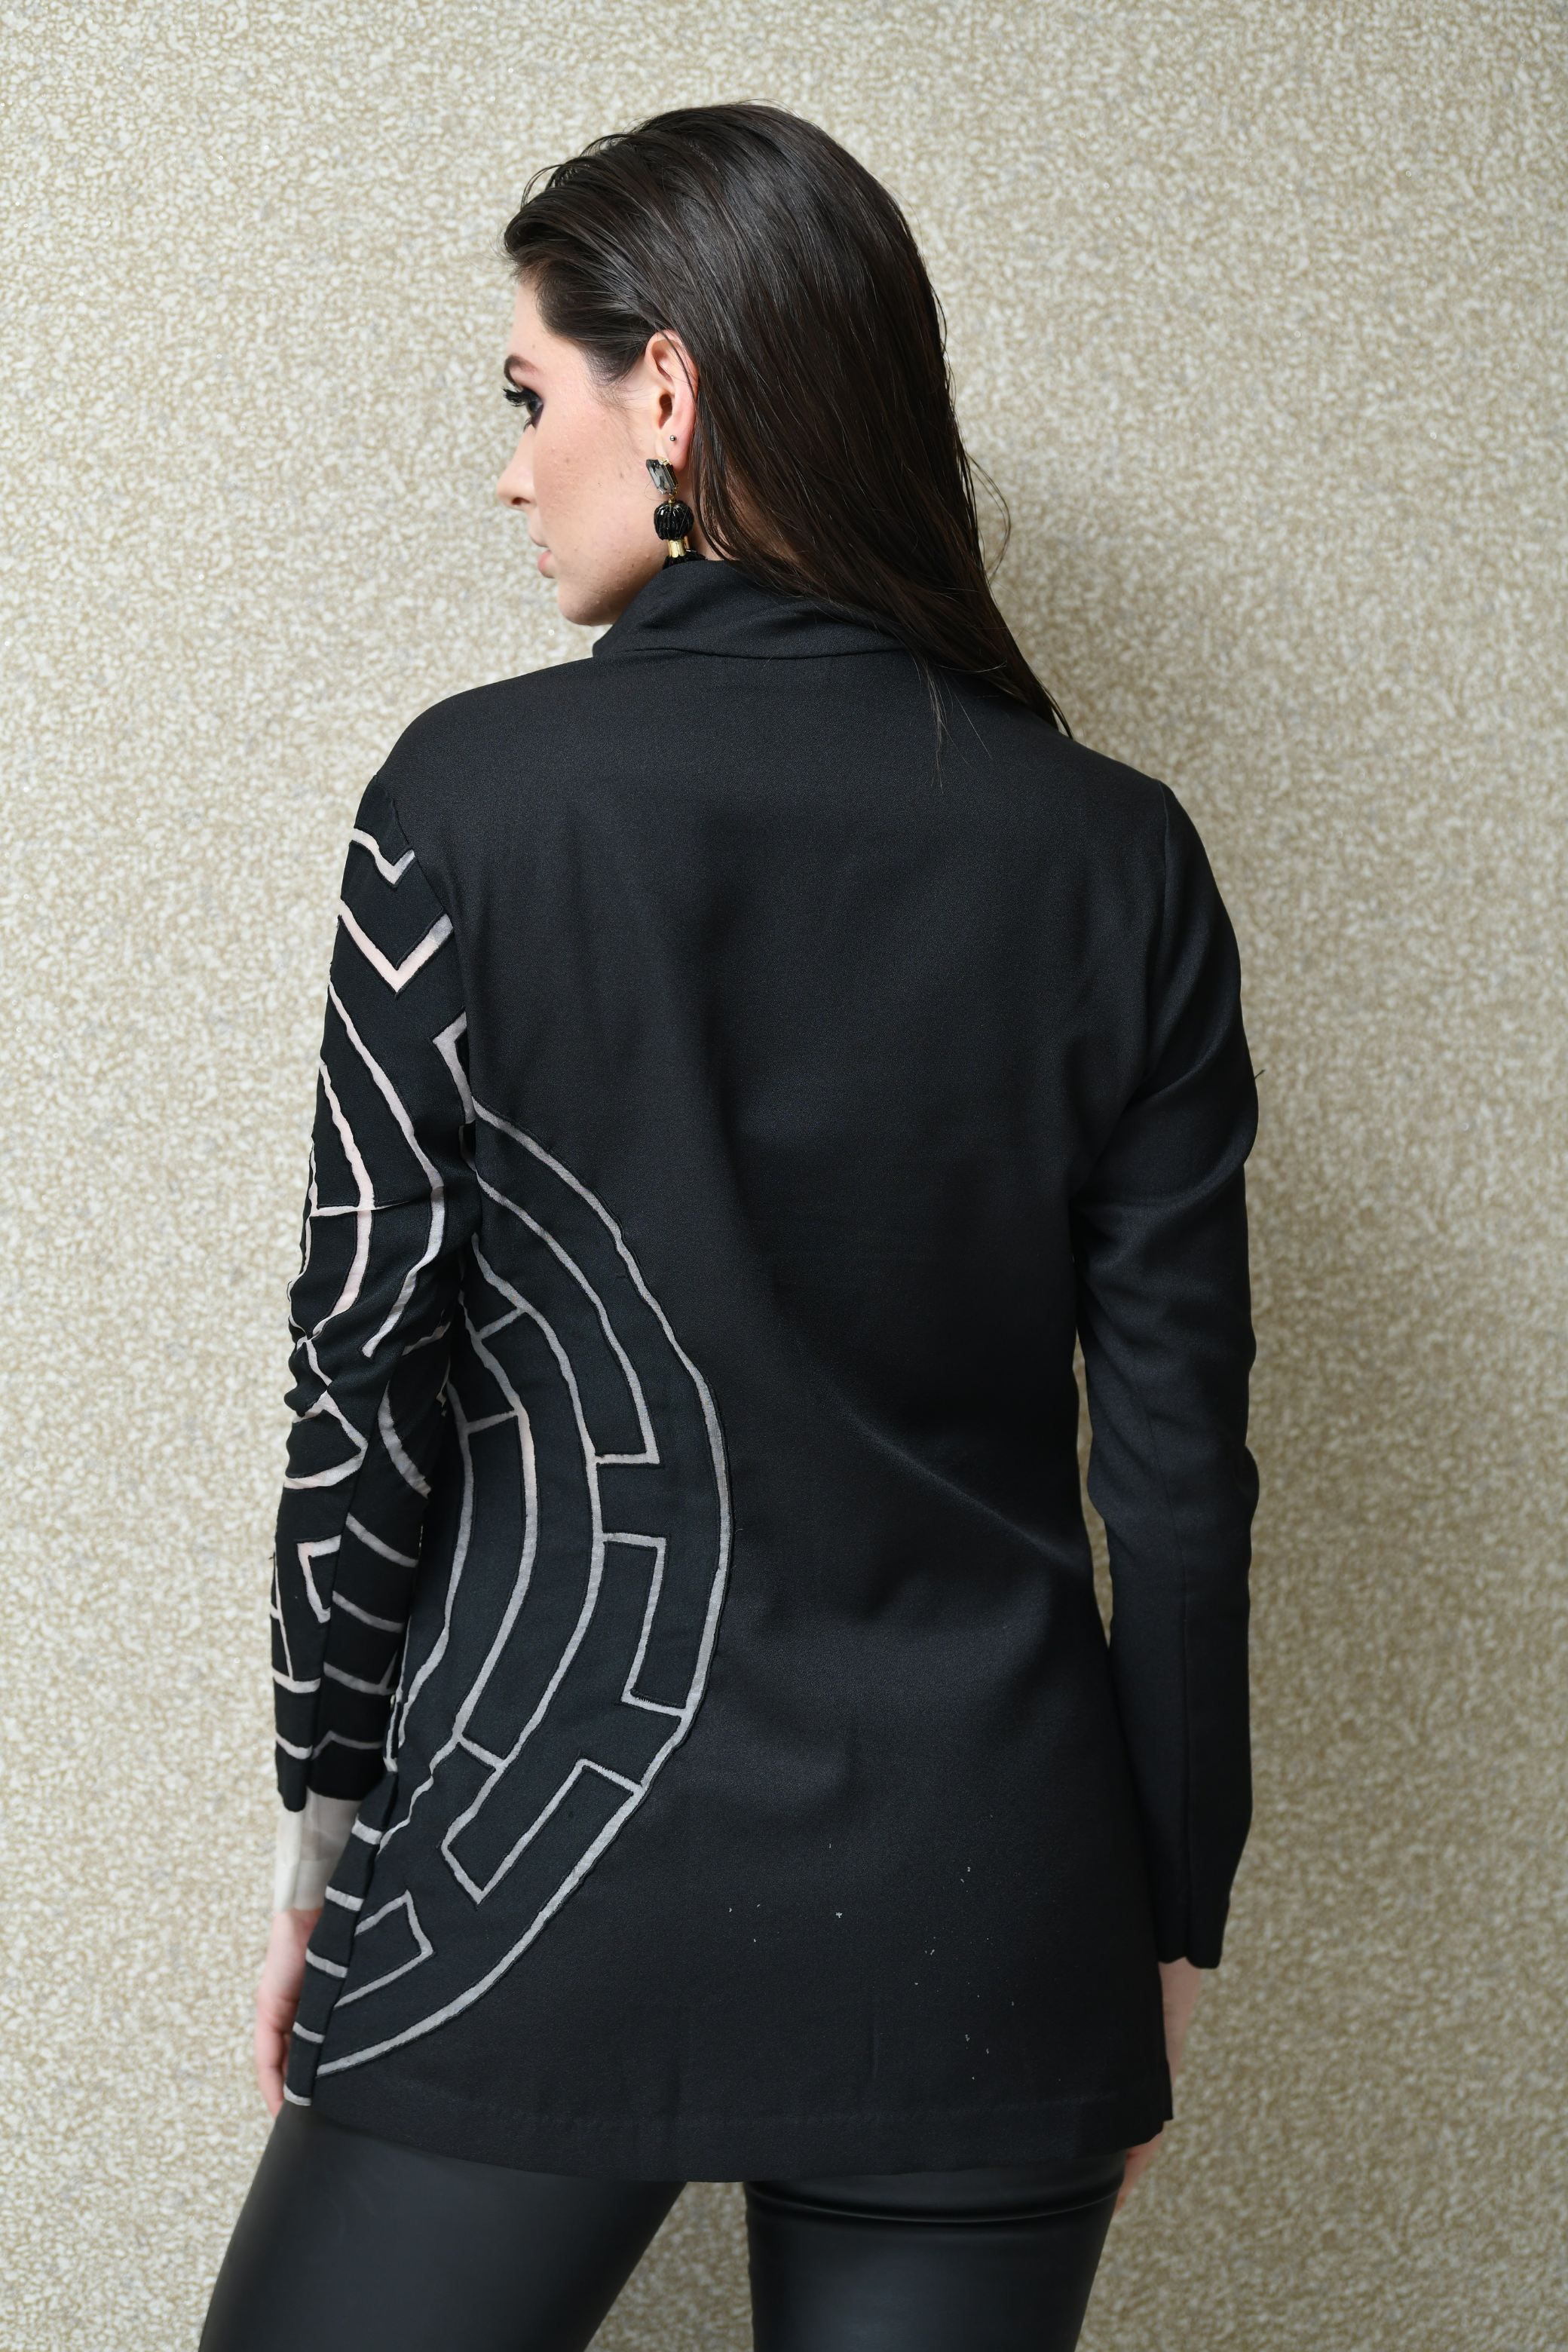 Embroidered Black Jacket